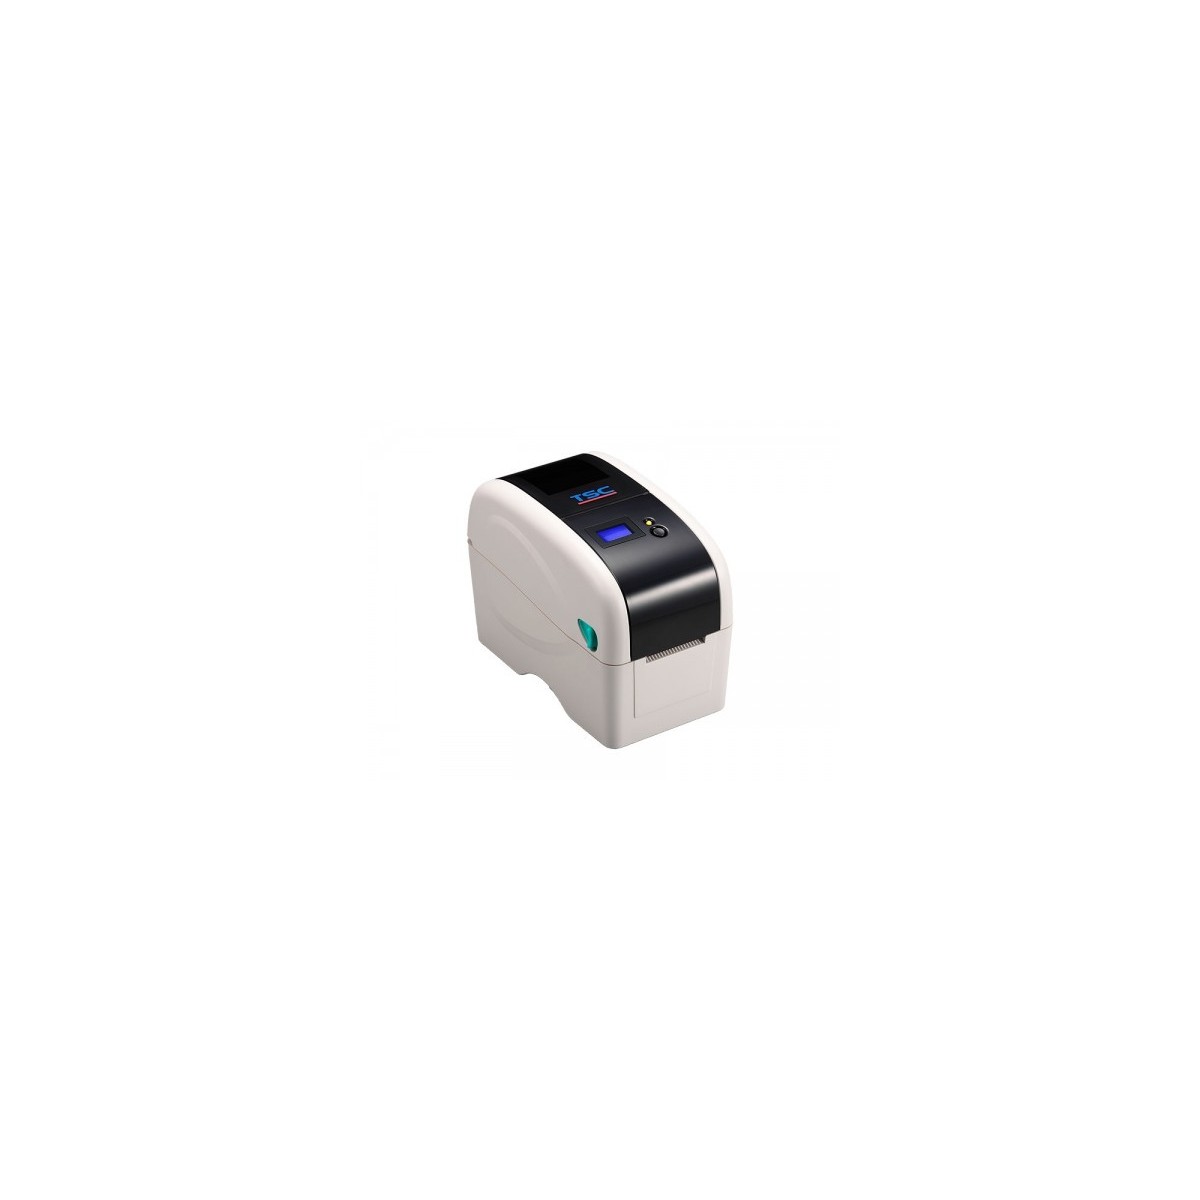 TSC TTP-225 203dpi USB RS232 beige - Label Printer - Label Printer